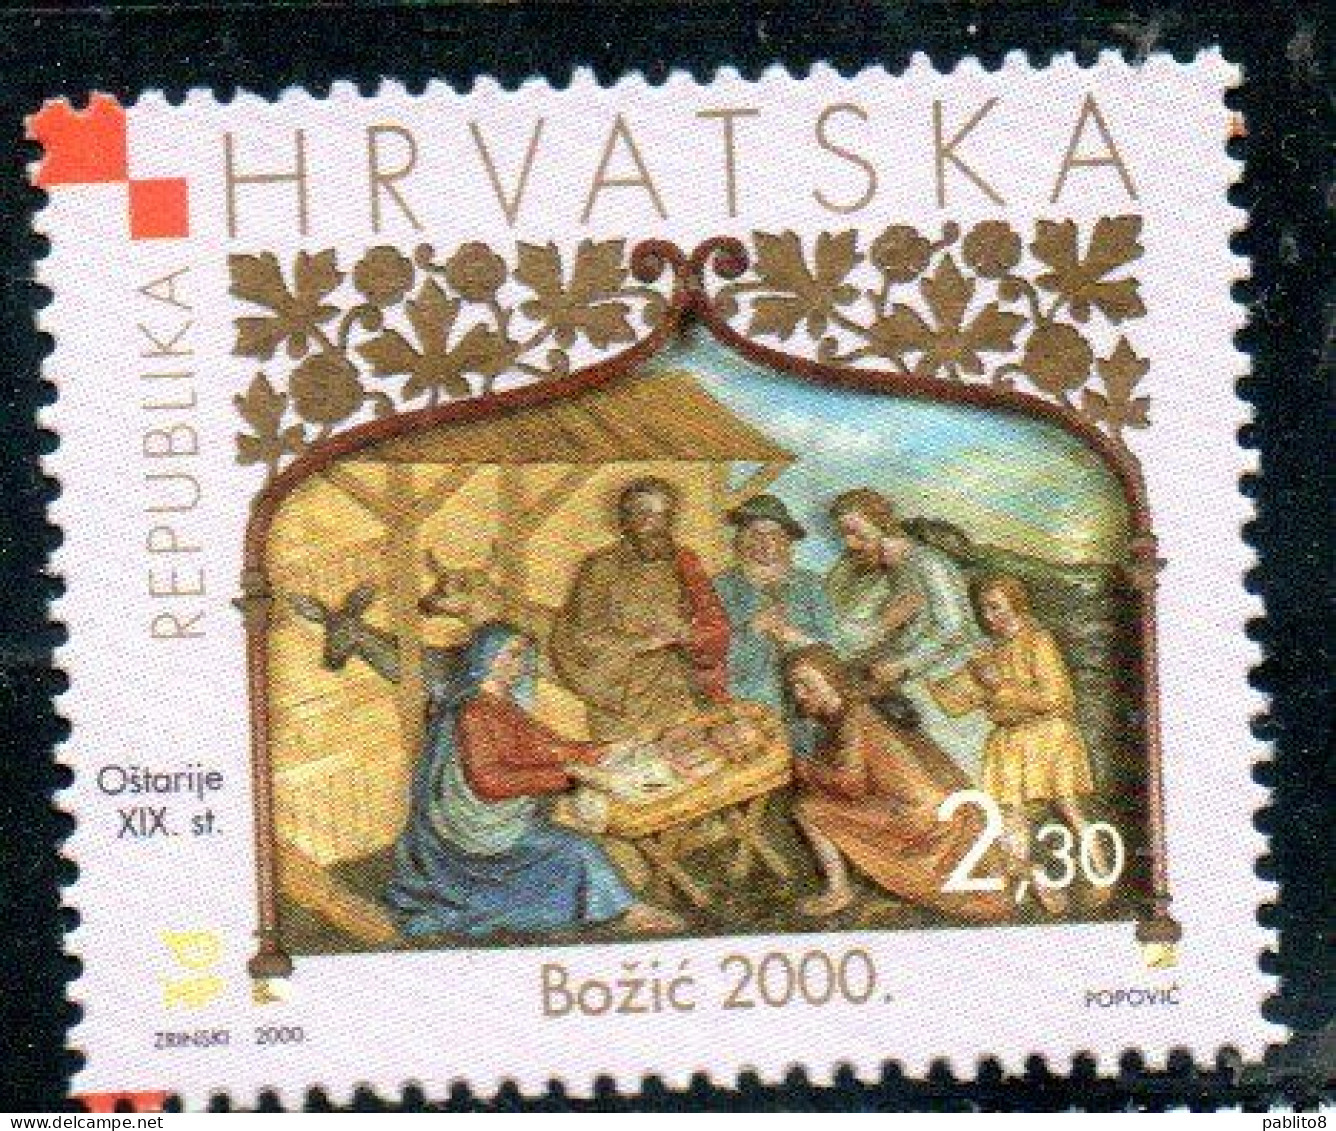 HRVATSKA CROATIA CROAZIA 2000 CHRISTMAS SRETAN BOZIC NATALE NOEL WEIHNACHTEN NAVIDAD 2.30k MNH - Croazia